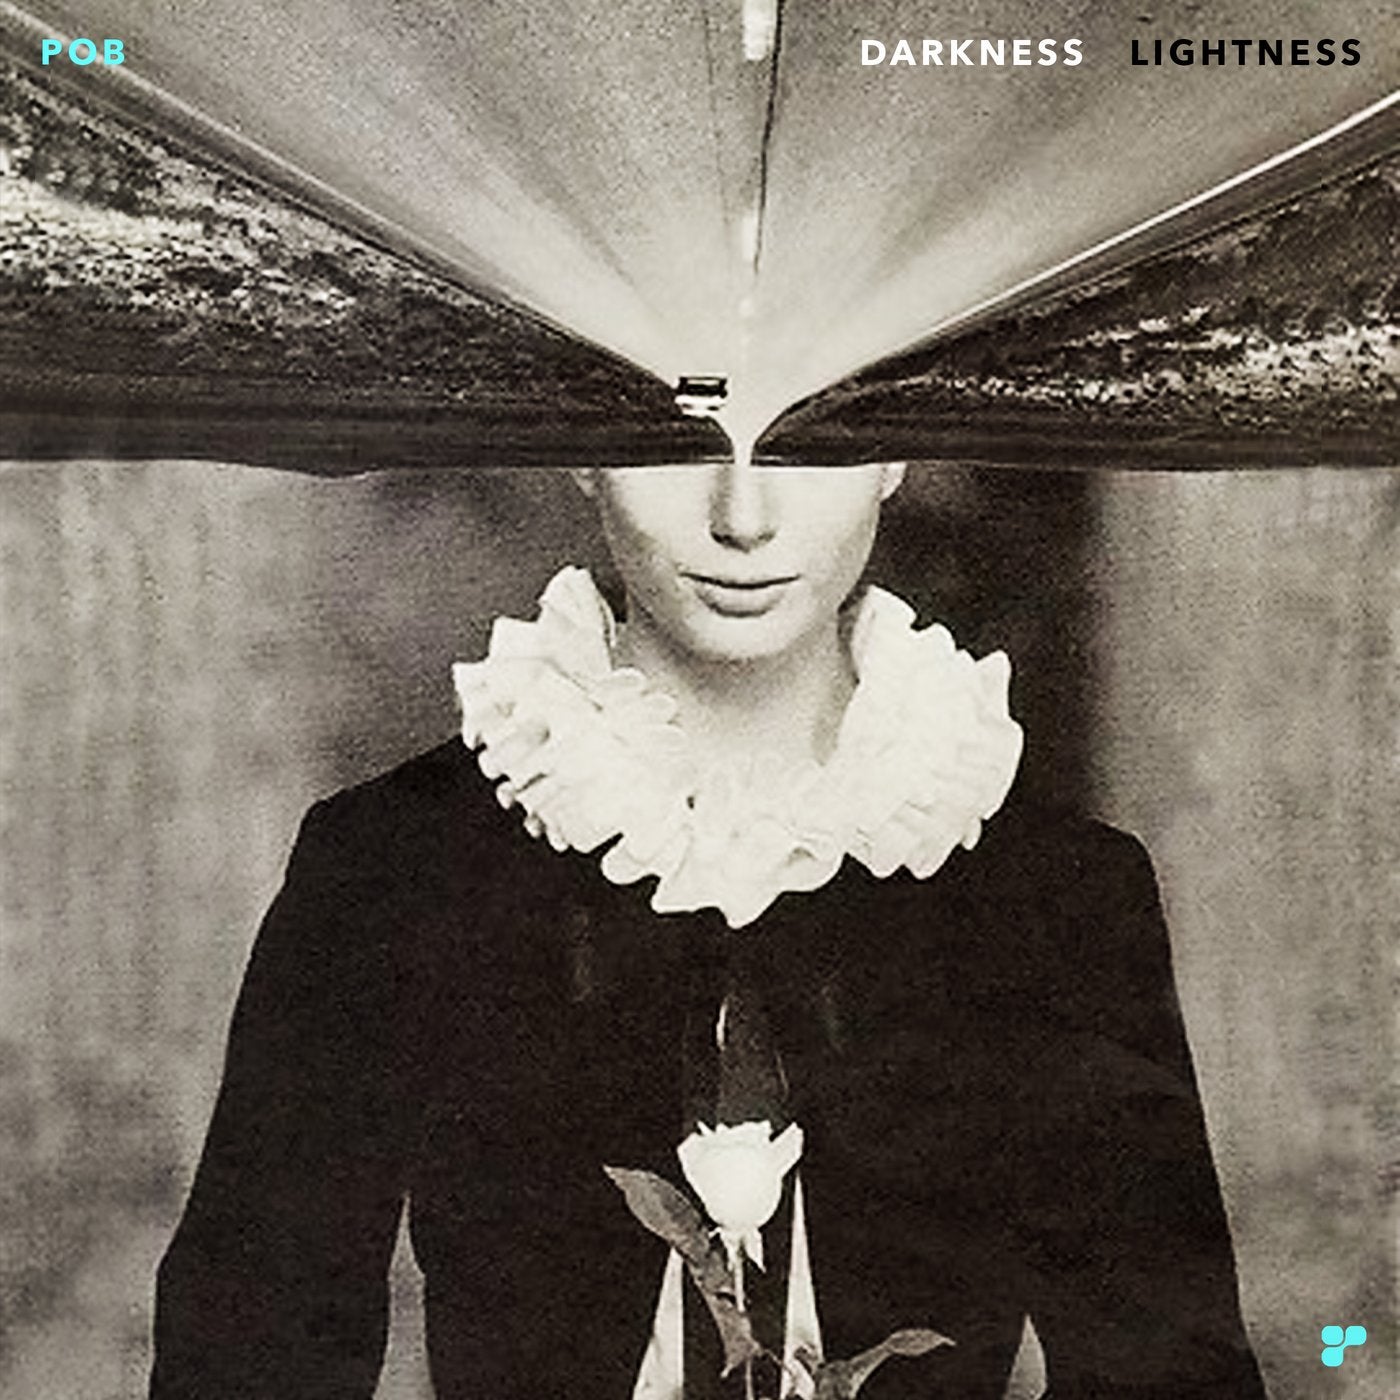 Darkness / Lightness